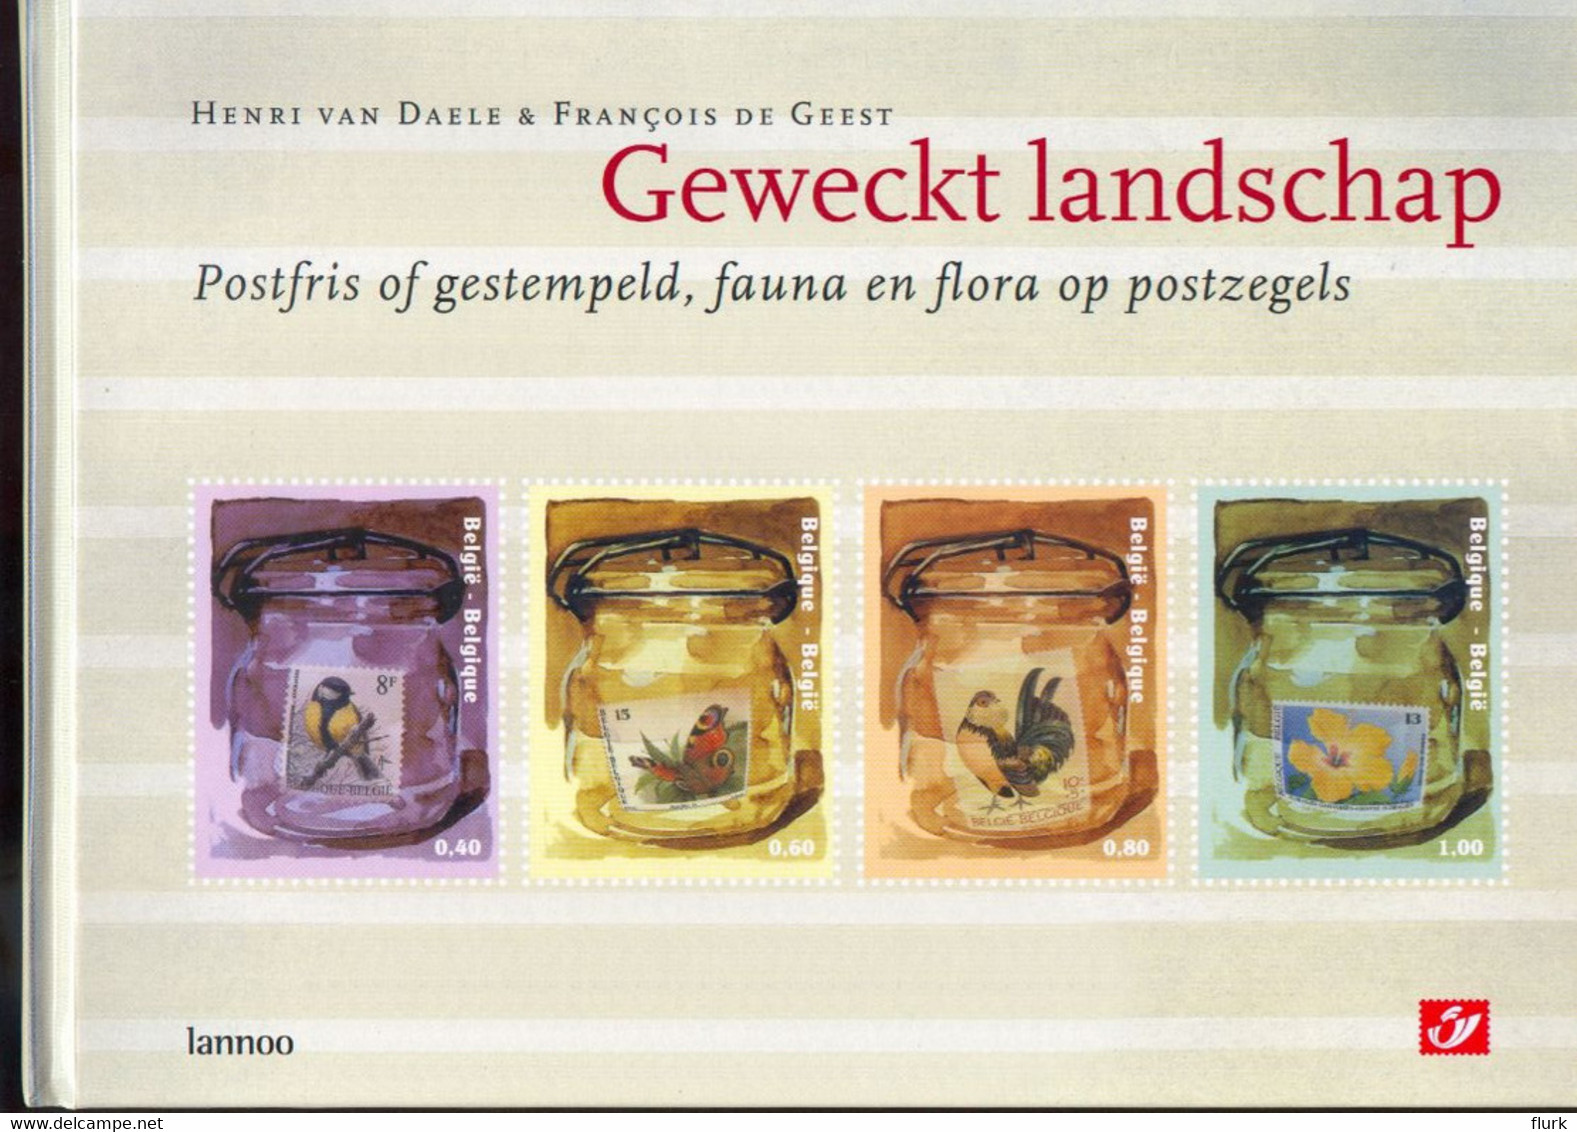 Geweckt Landschap Postfris Of Gestempeld, Fauna En Flora Op Postzegels Perfect - Tematica